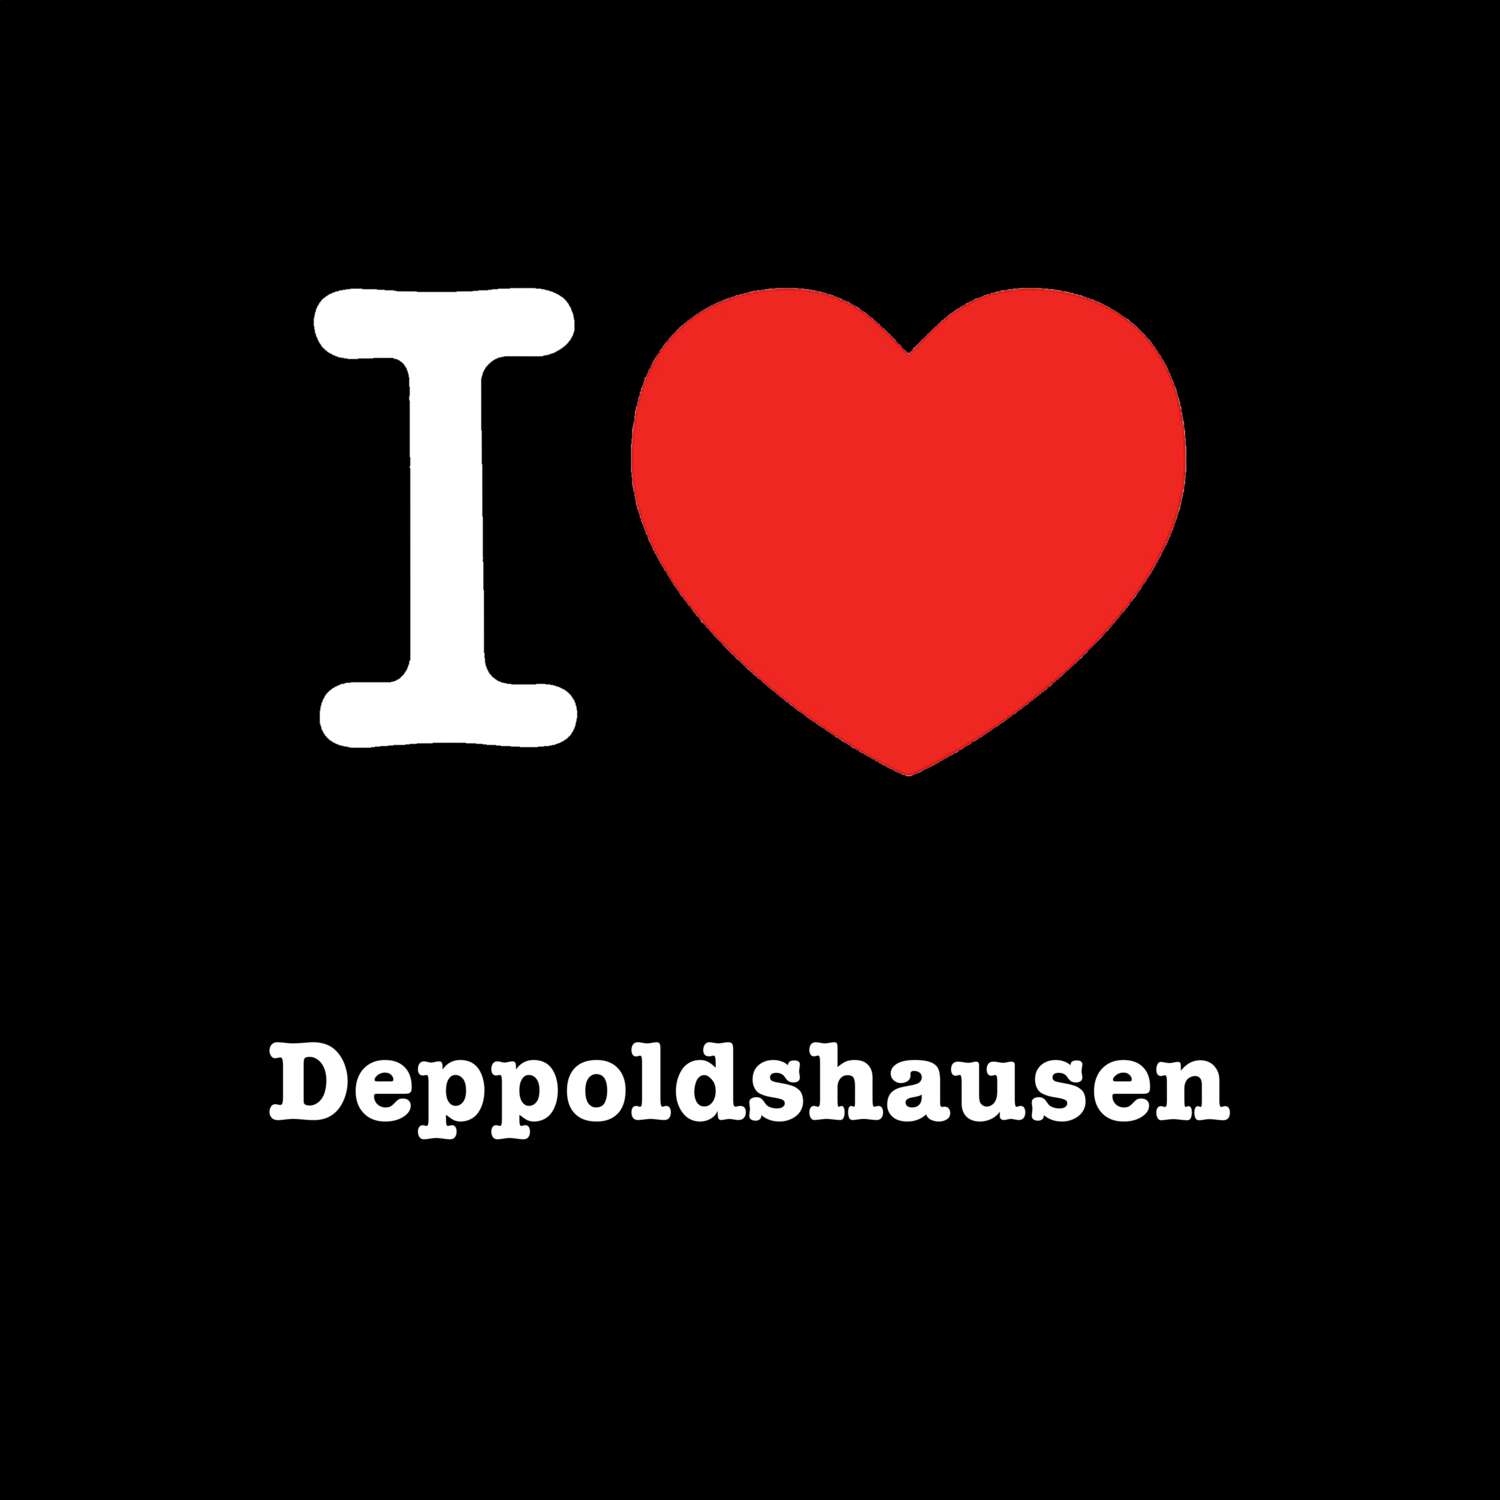 Deppoldshausen T-Shirt »I love«